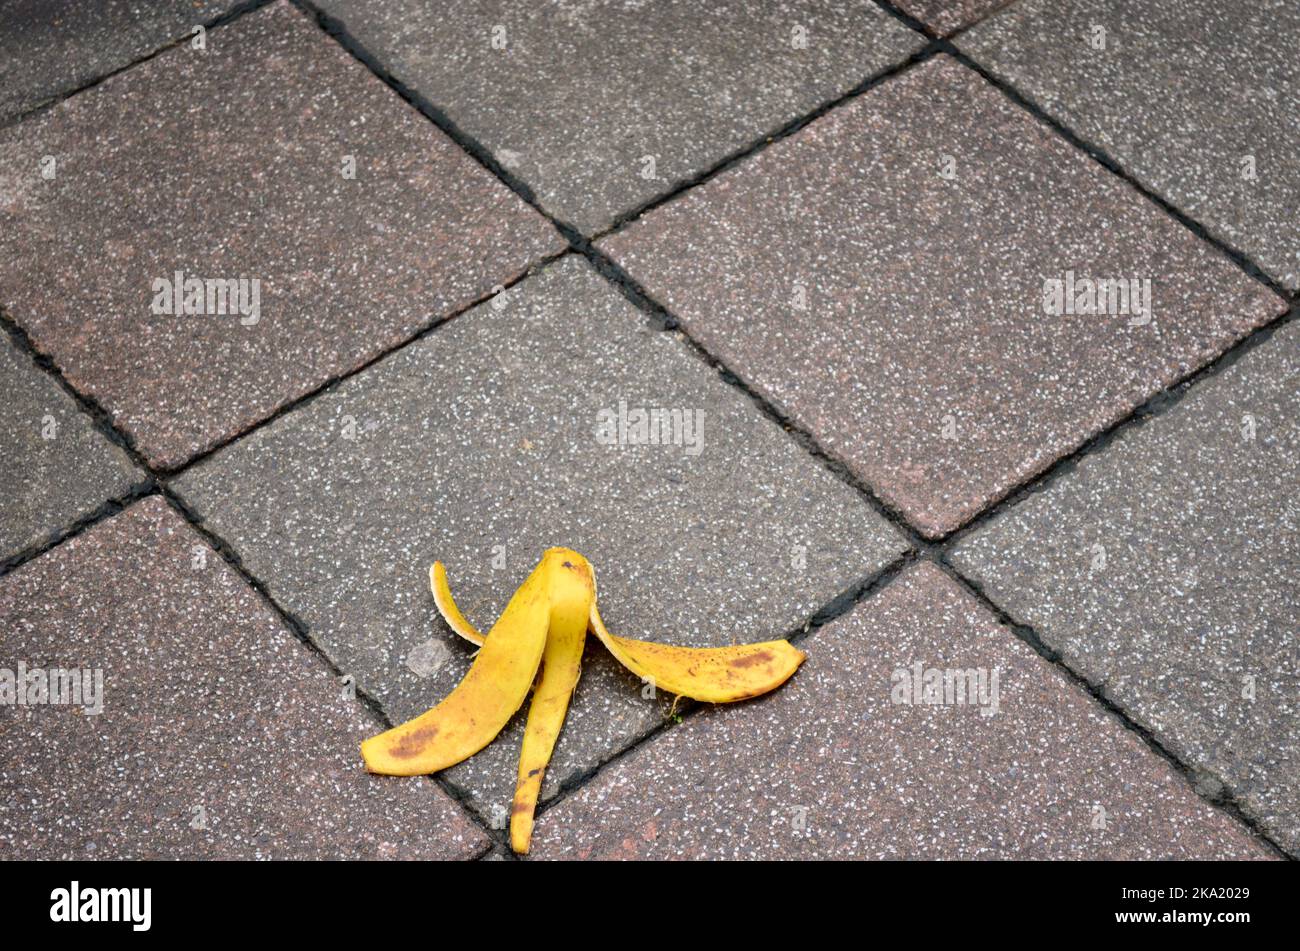 Don't slip on the banana peel Stock Photo